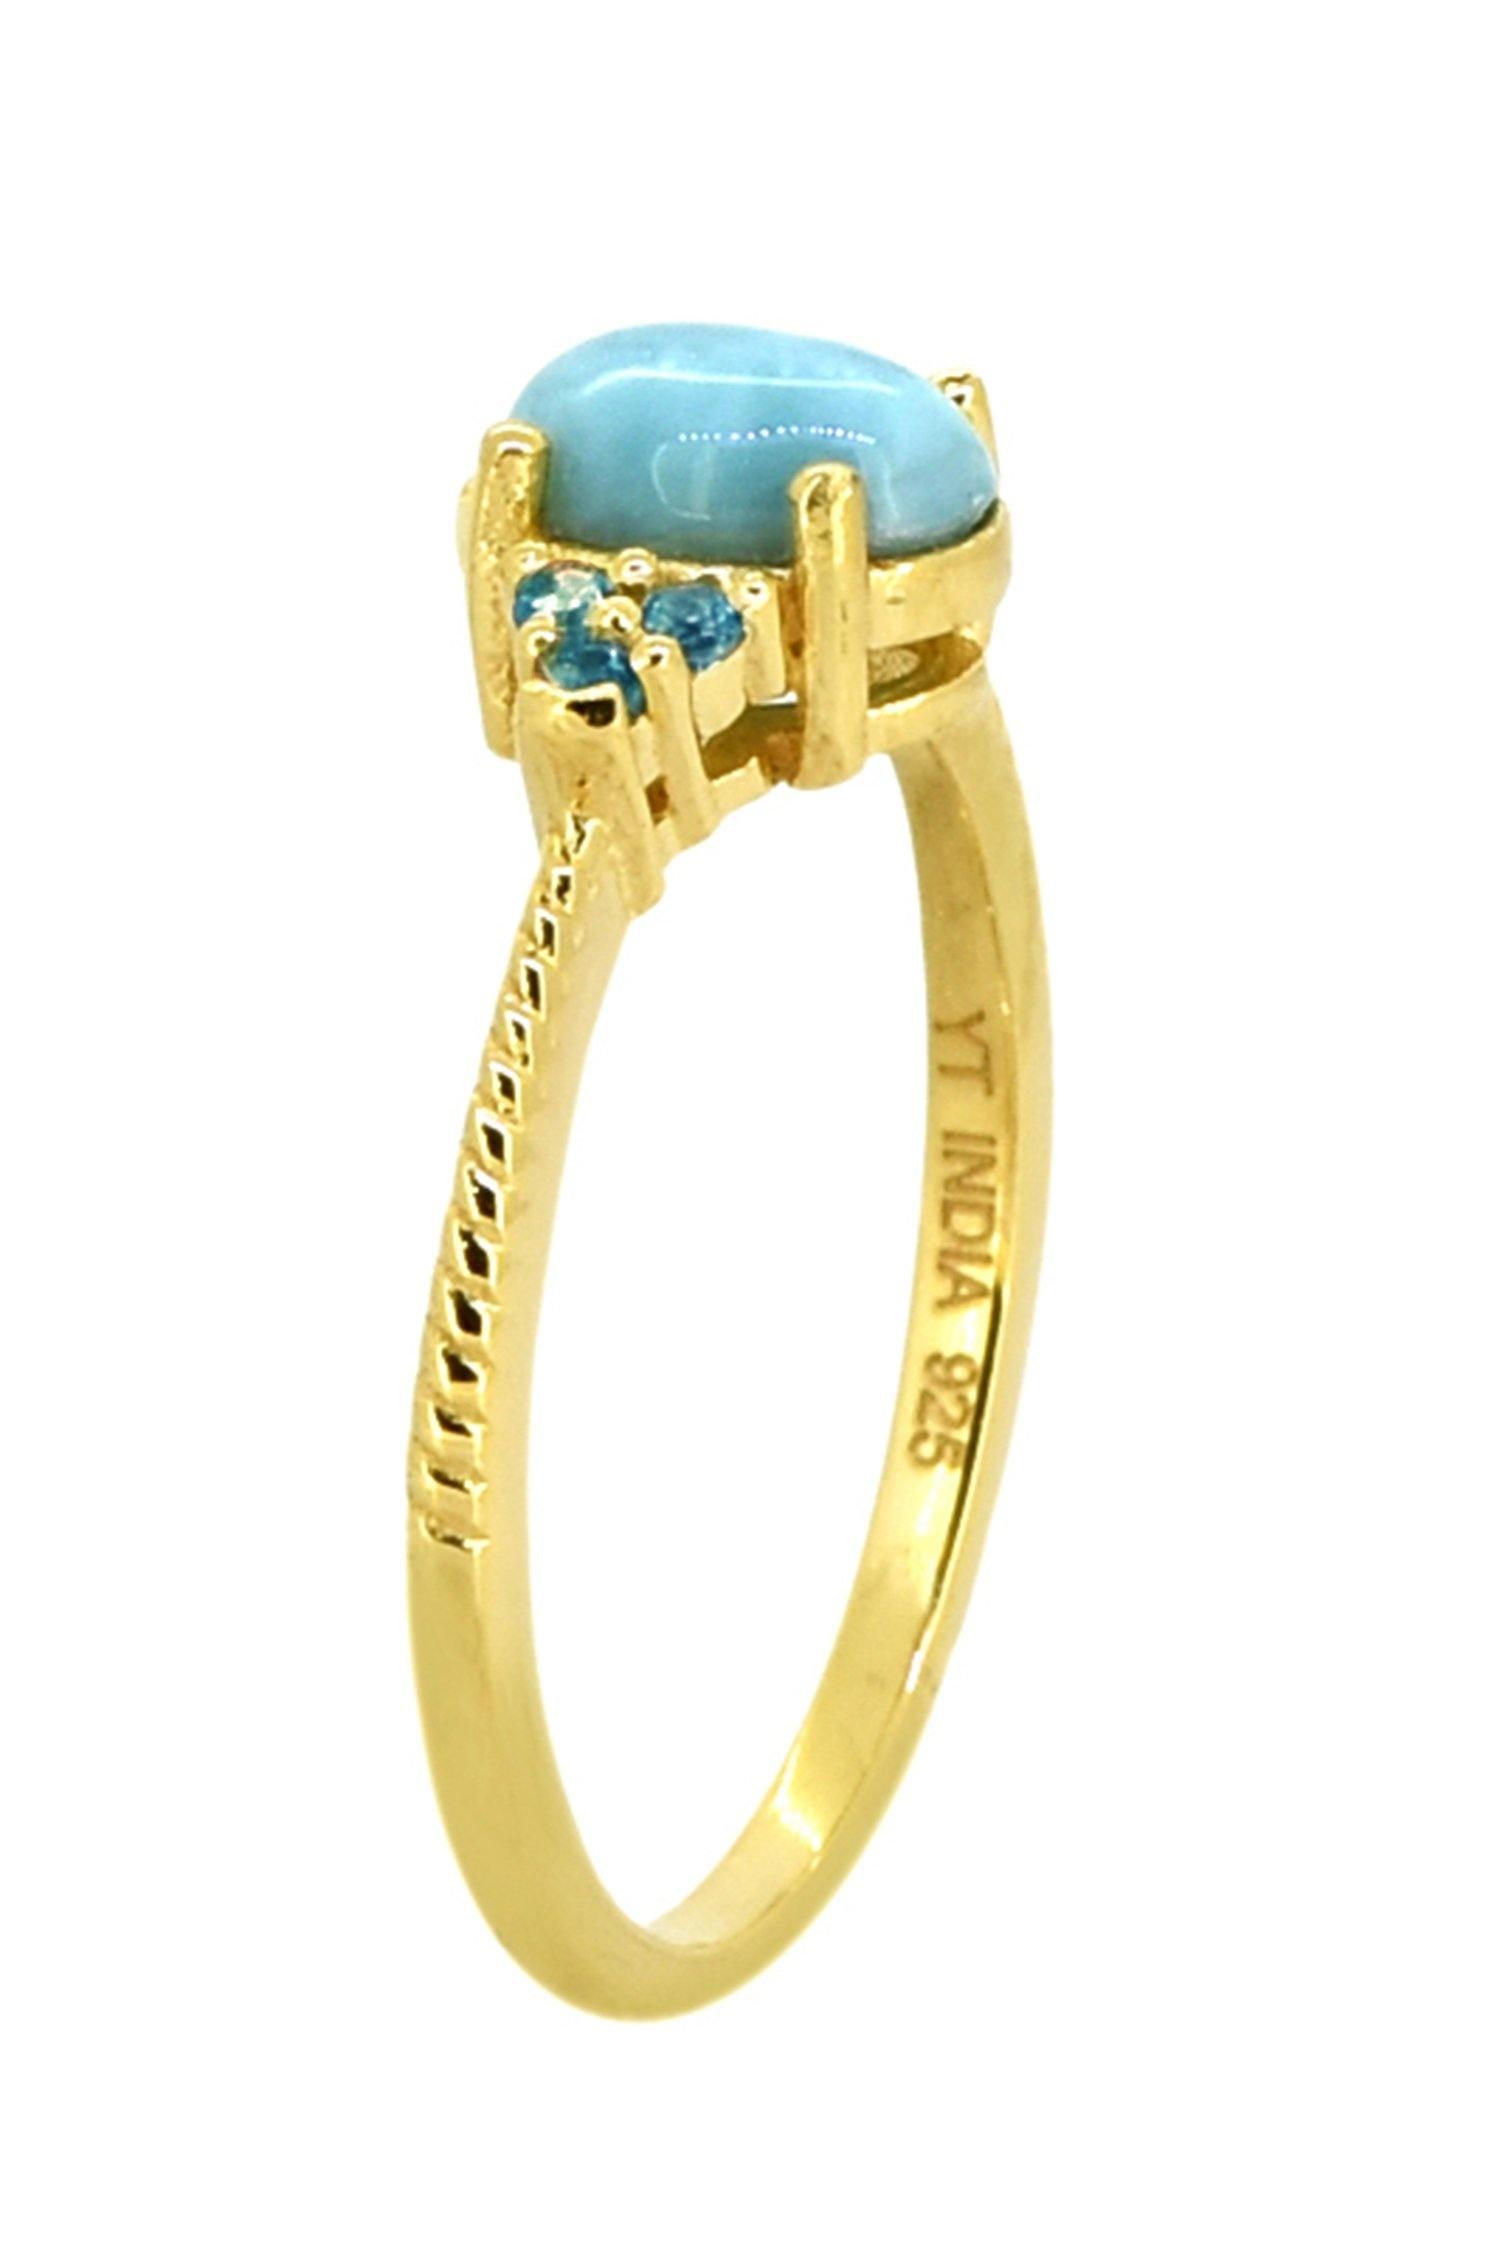 Larimar London Blue Topaz 925 Sterling Silver Gold Plated Ring Genuine Gemstone Jewelry - YoTreasure